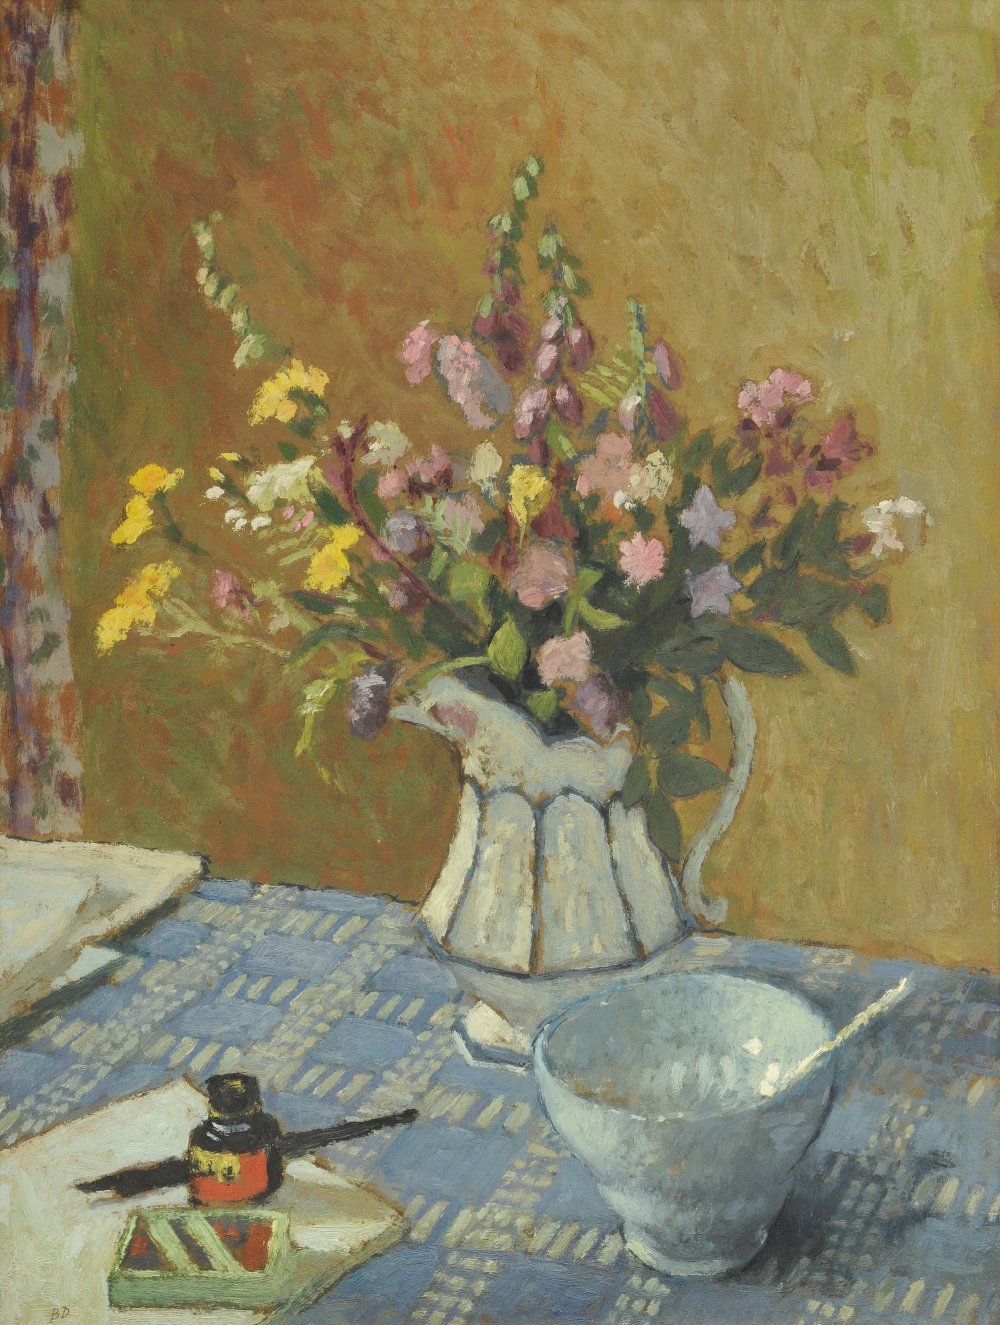 Bernard Dunstan RA, PPRWA (b.1920) 
Still life of summer flowers in a jug with a bowl, fountain